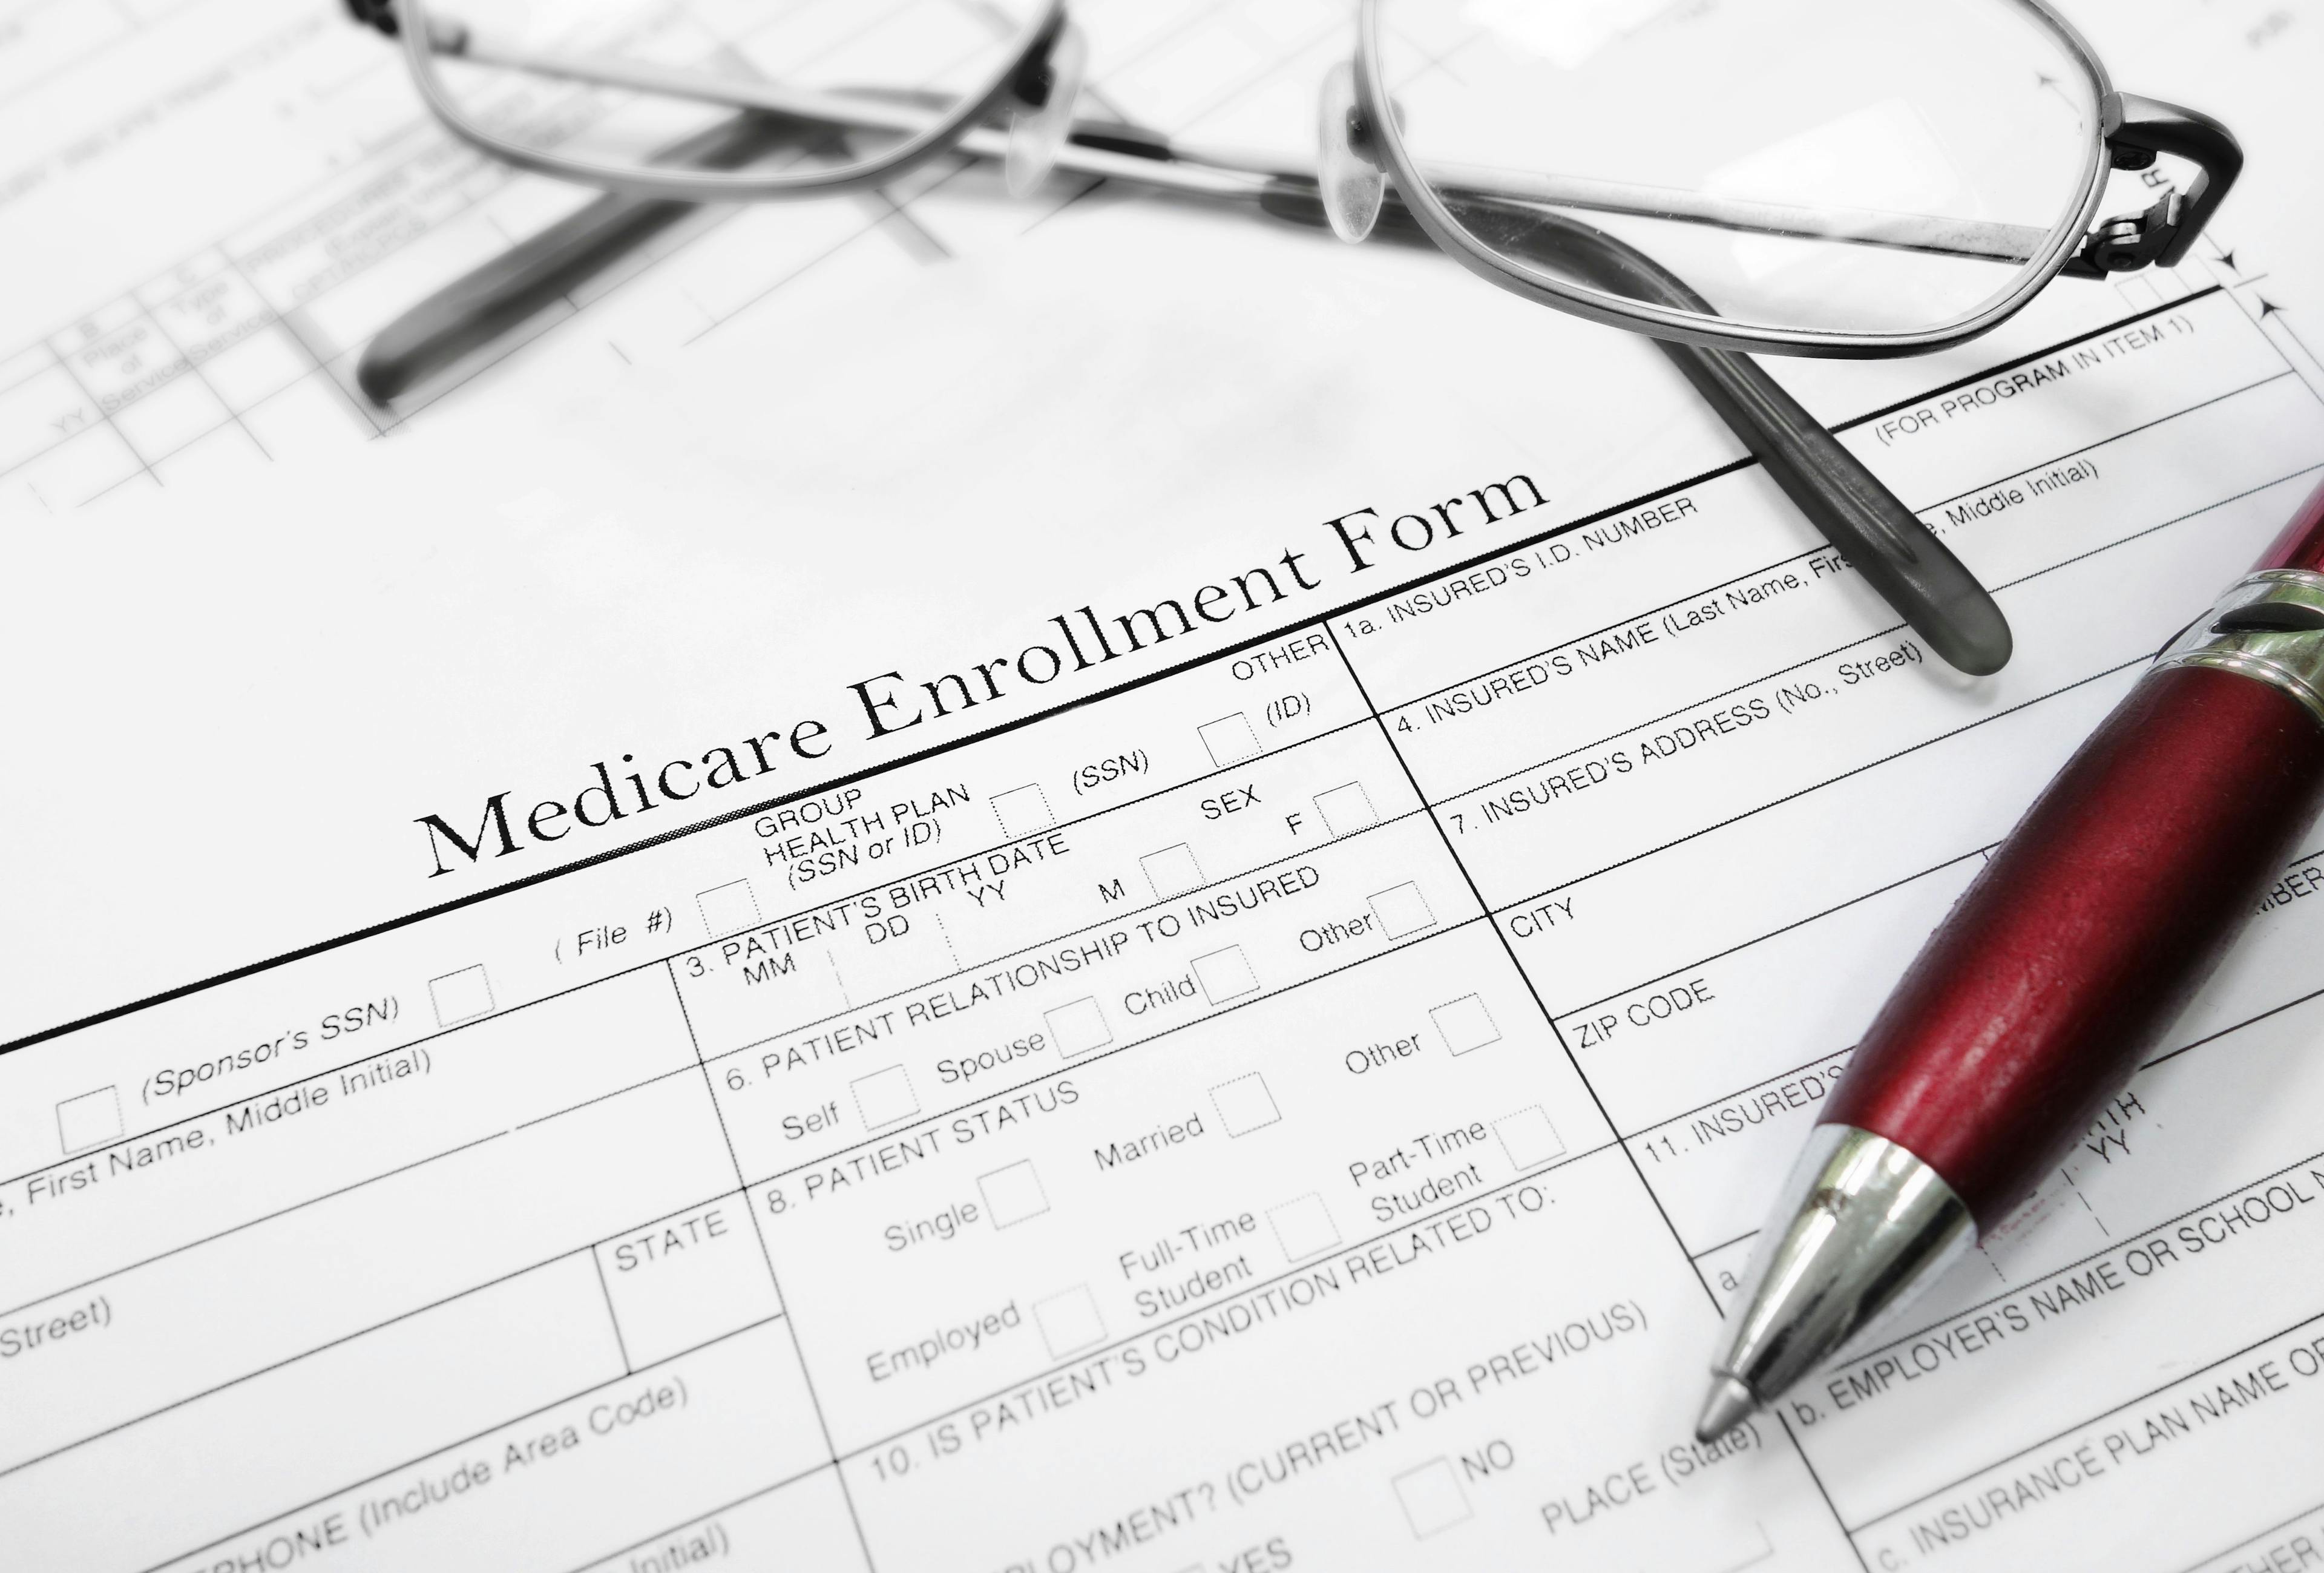 Medicare enrollment form | Image Credit: zimmytws - stock.adobe.com